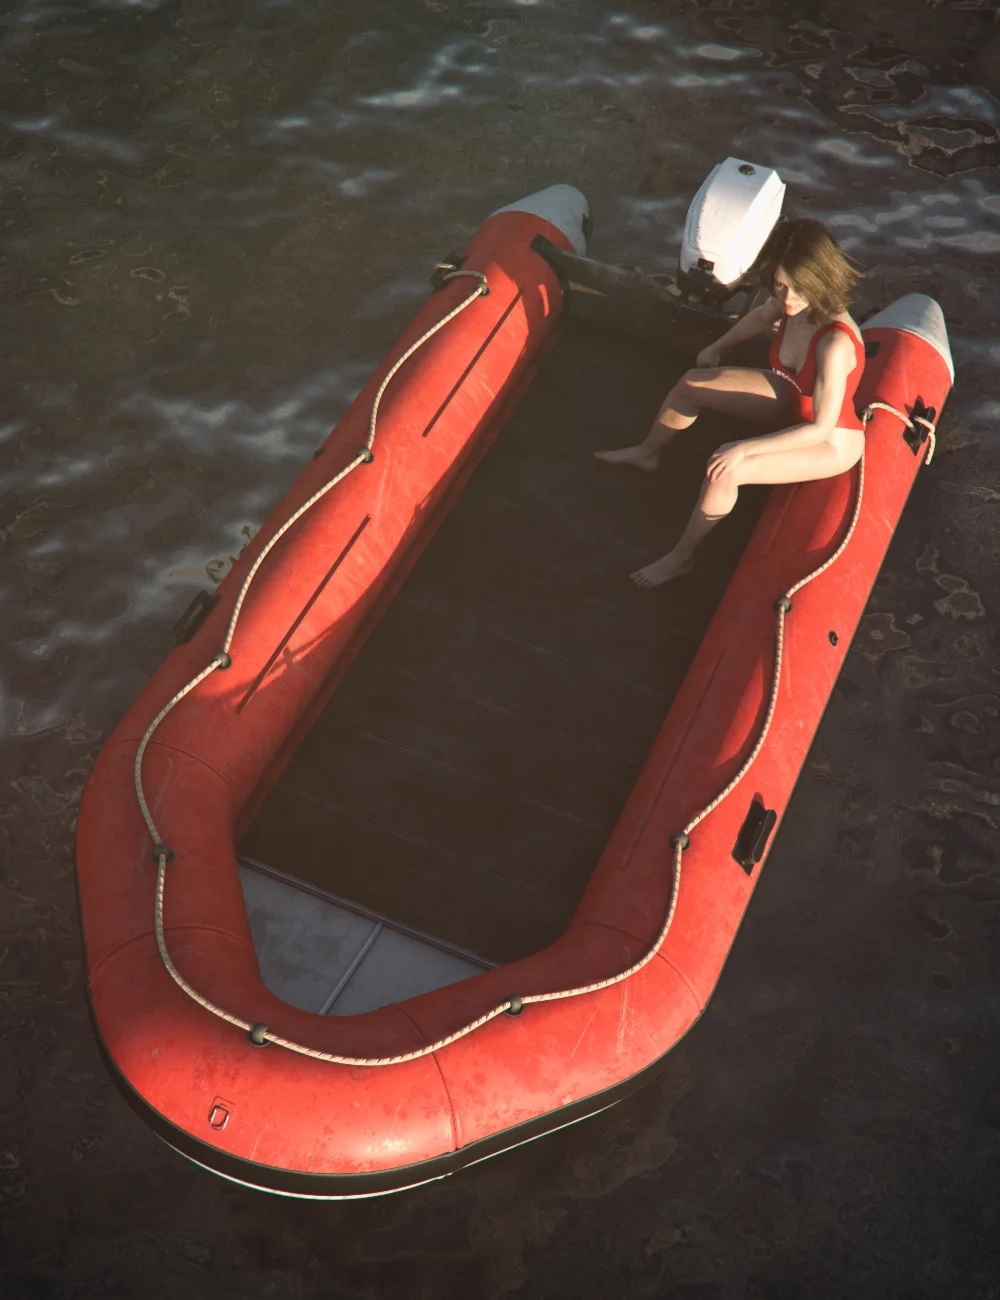 Motorized Inflatable Boat